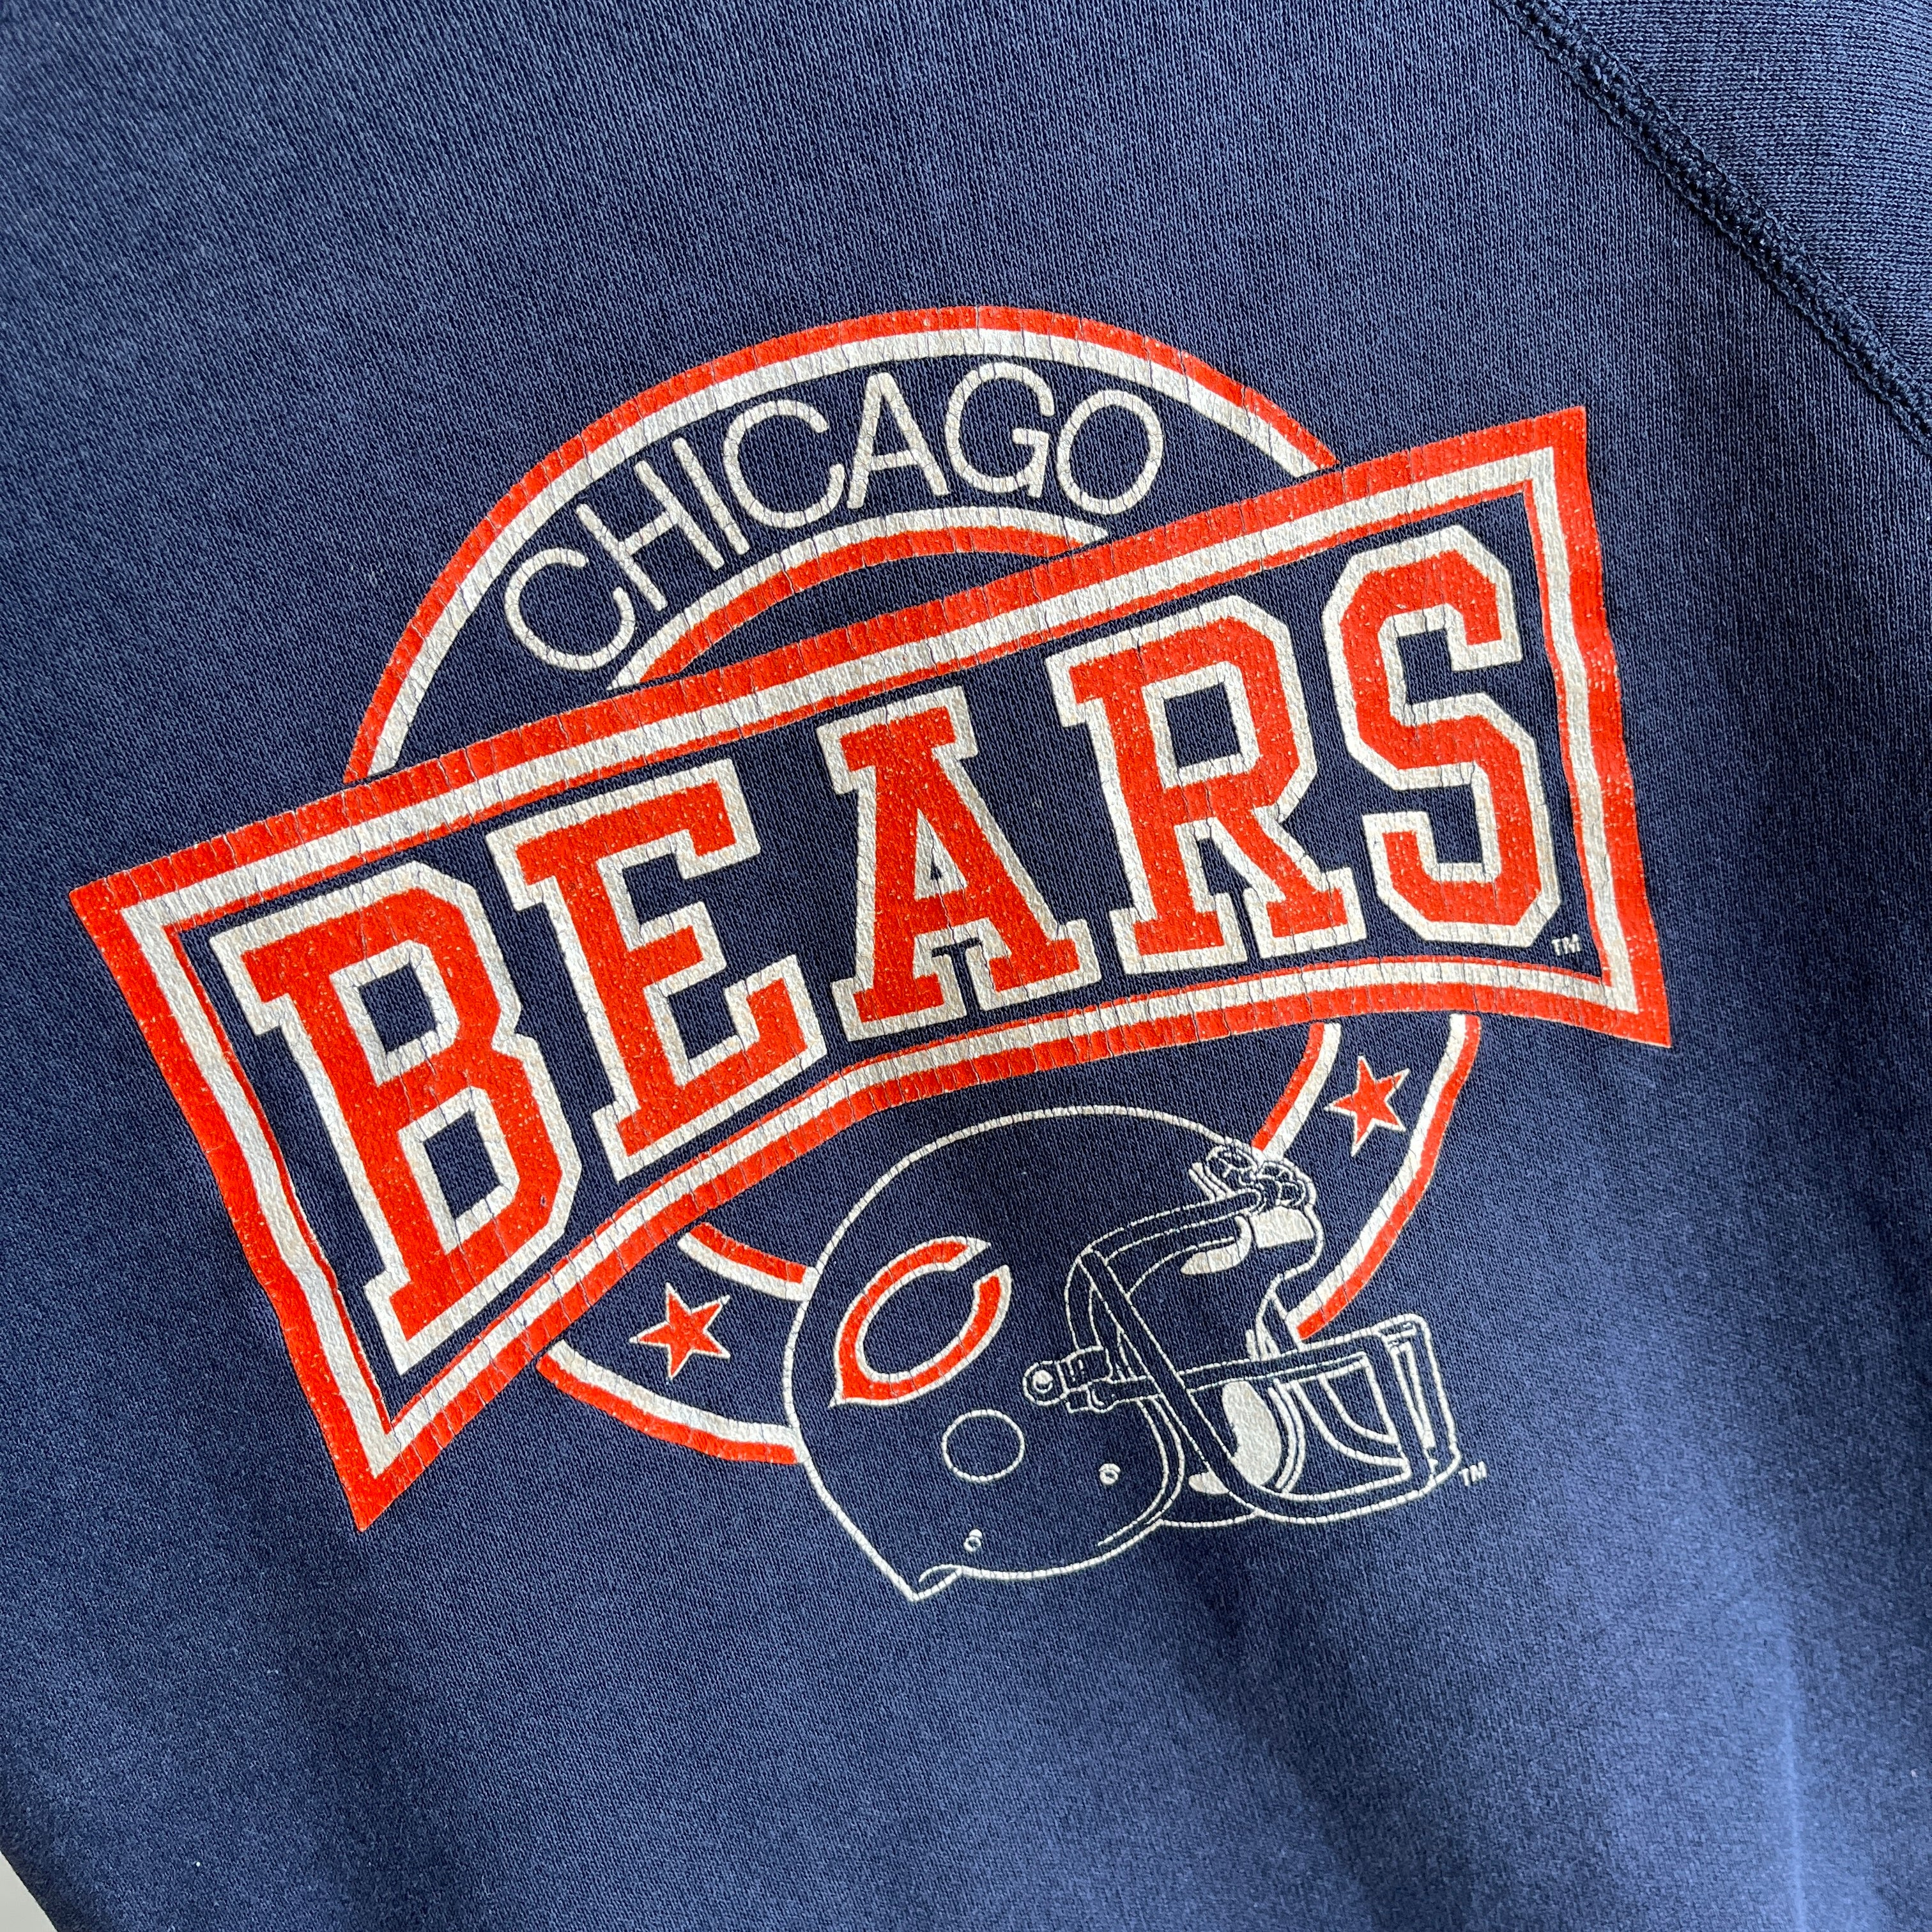 1980s (Early) Chicago Bears DIY Warm Up Sweatshirt by Artex